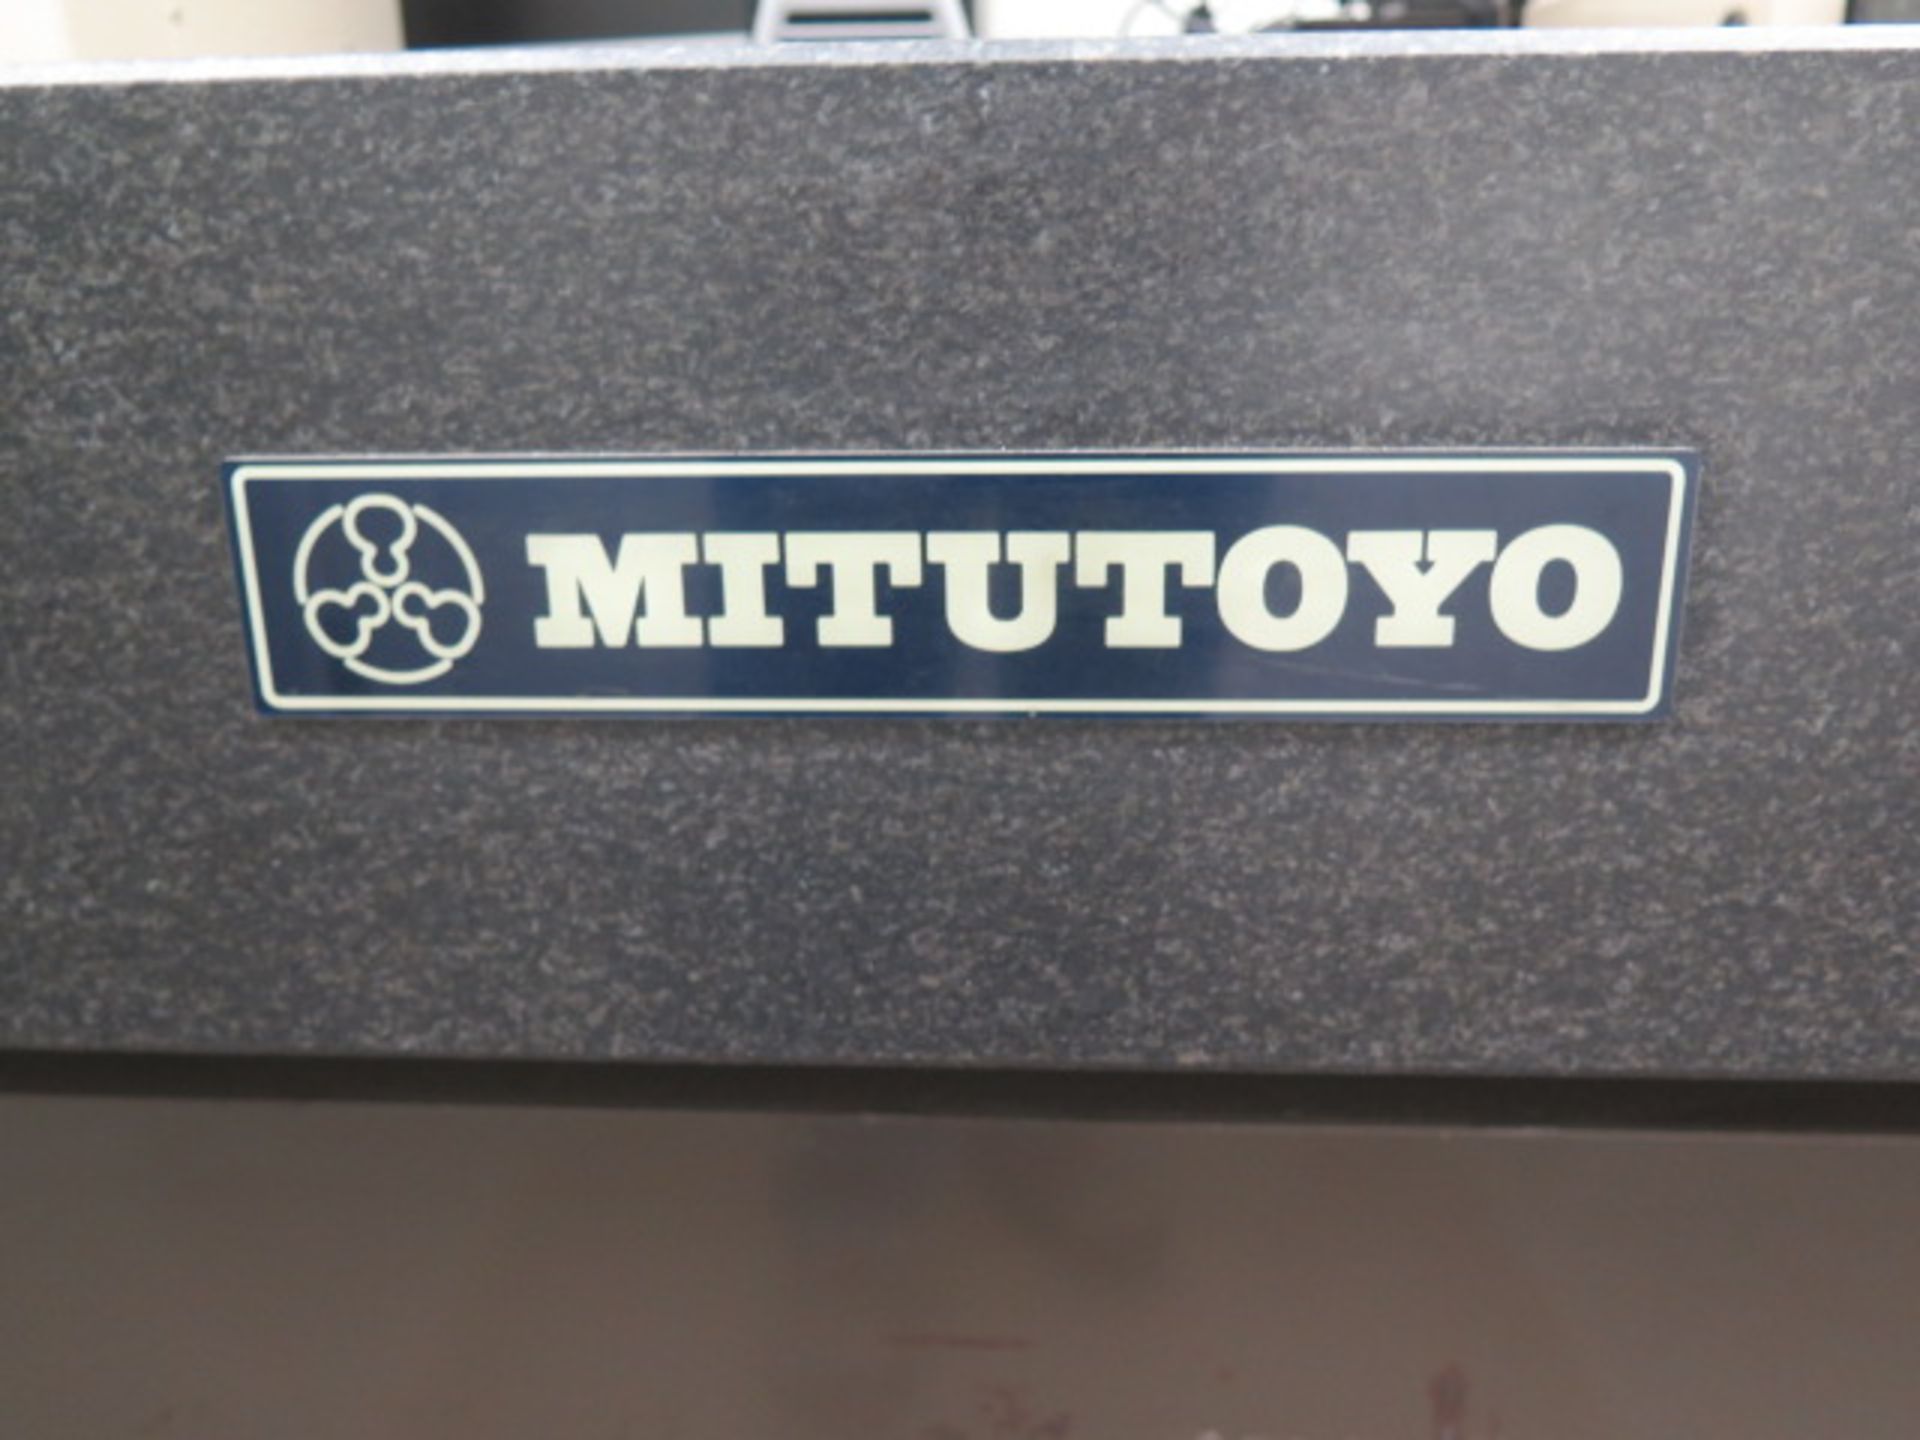 Mitutoyo B231 10/10 CMM Machine s/n 8301416 w/ Renishaw PH8 Probe Head, Mitutoyo MAG-1 Controller, - Image 4 of 11